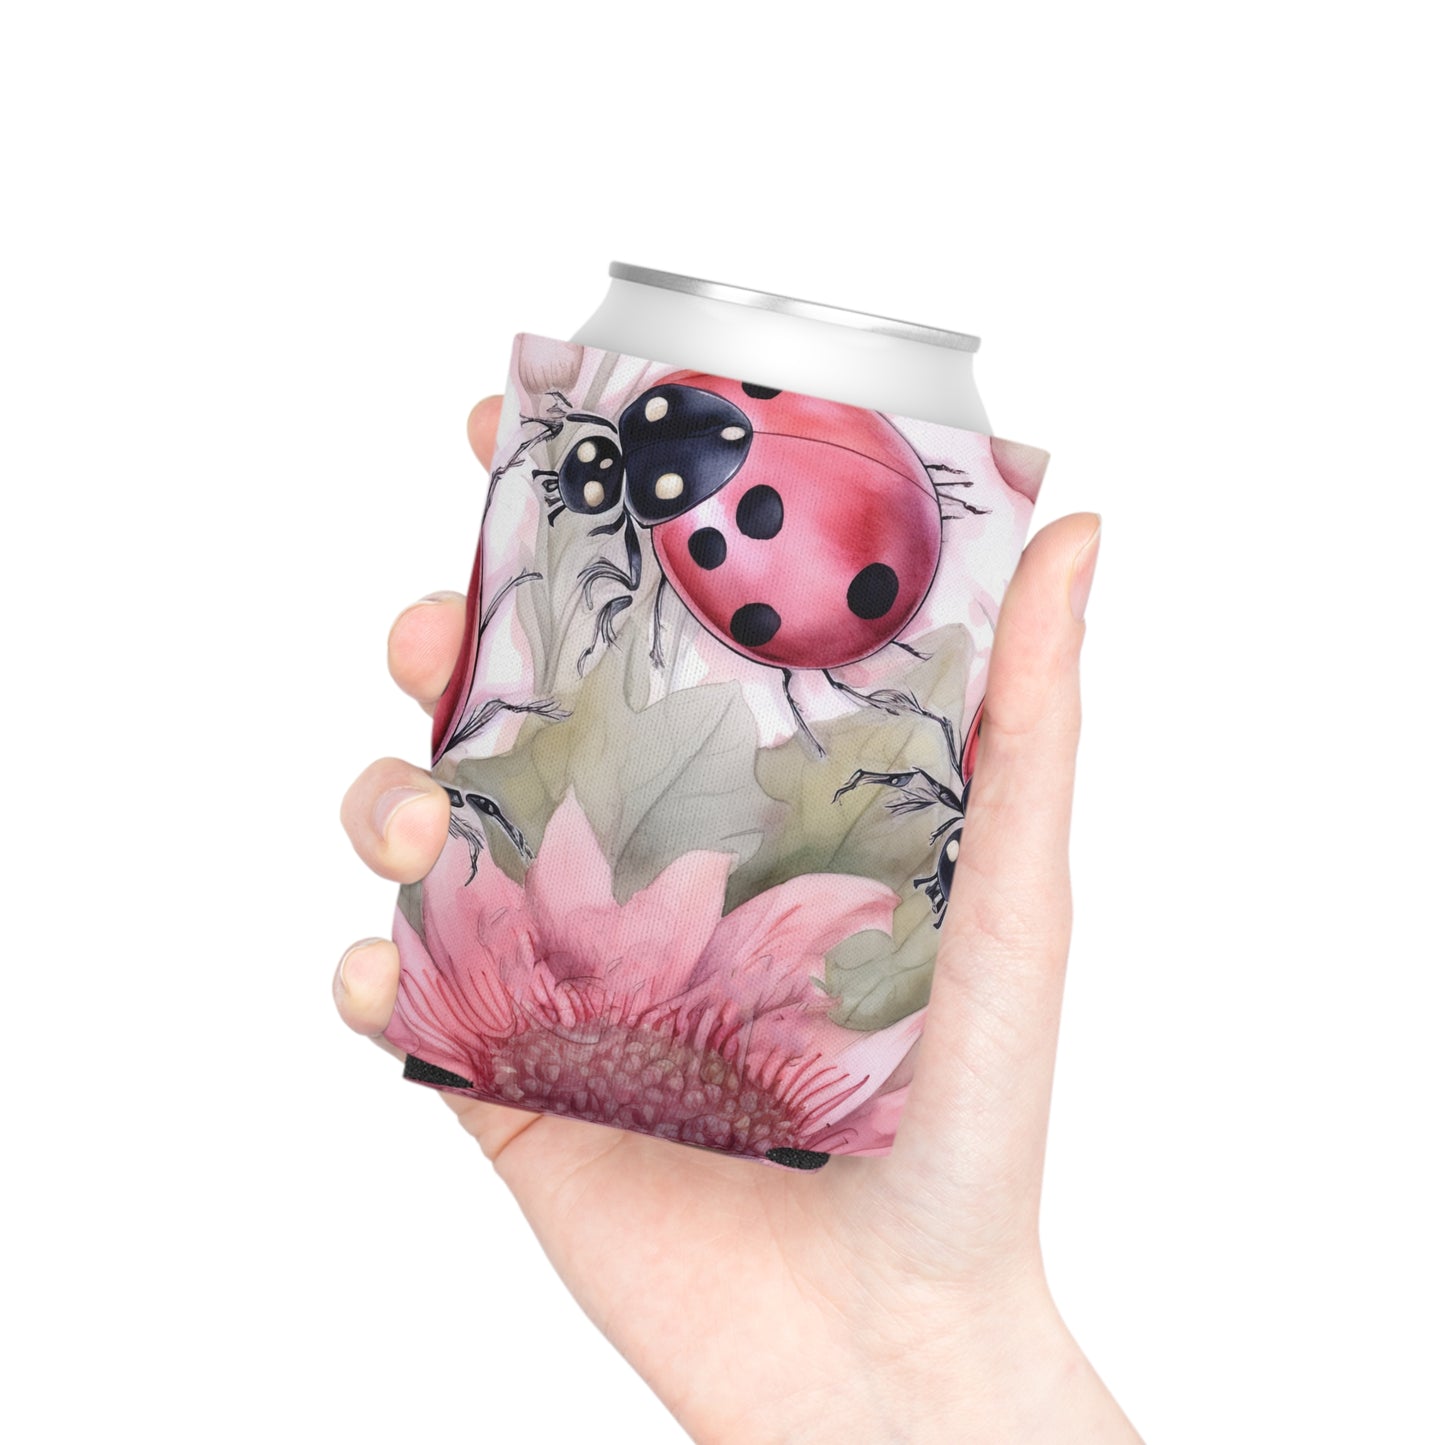 Ladybug Can Cooler, Summer Drink Sleeve